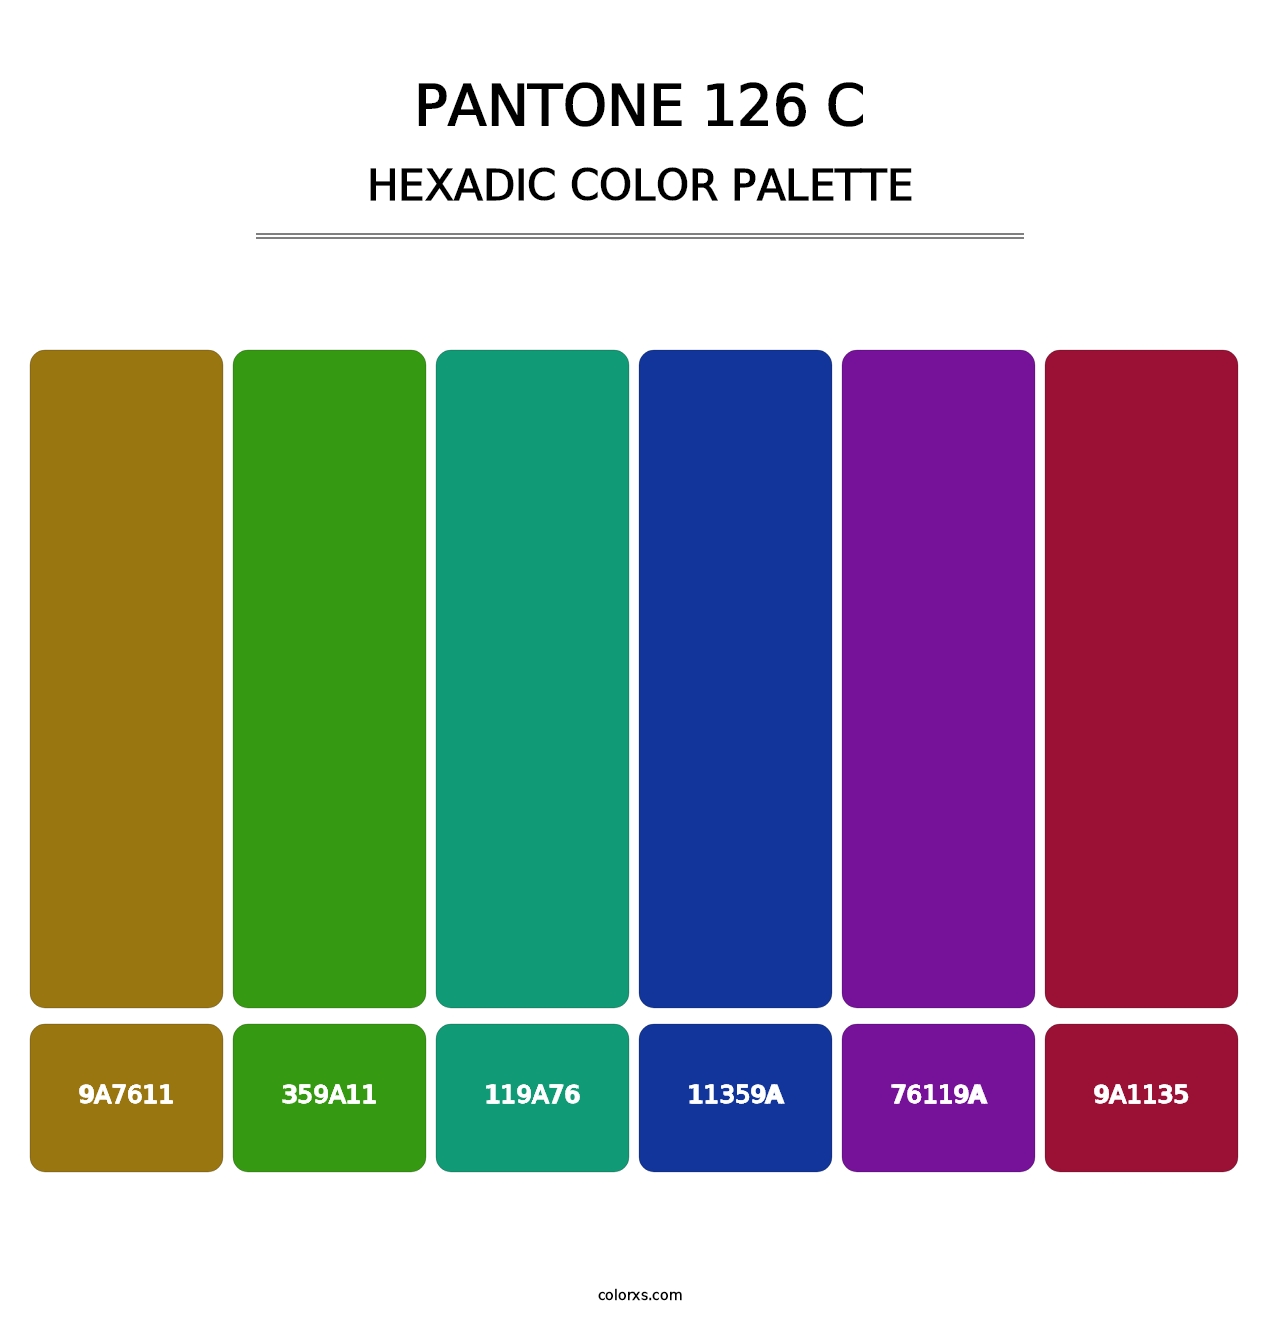 PANTONE 126 C - Hexadic Color Palette